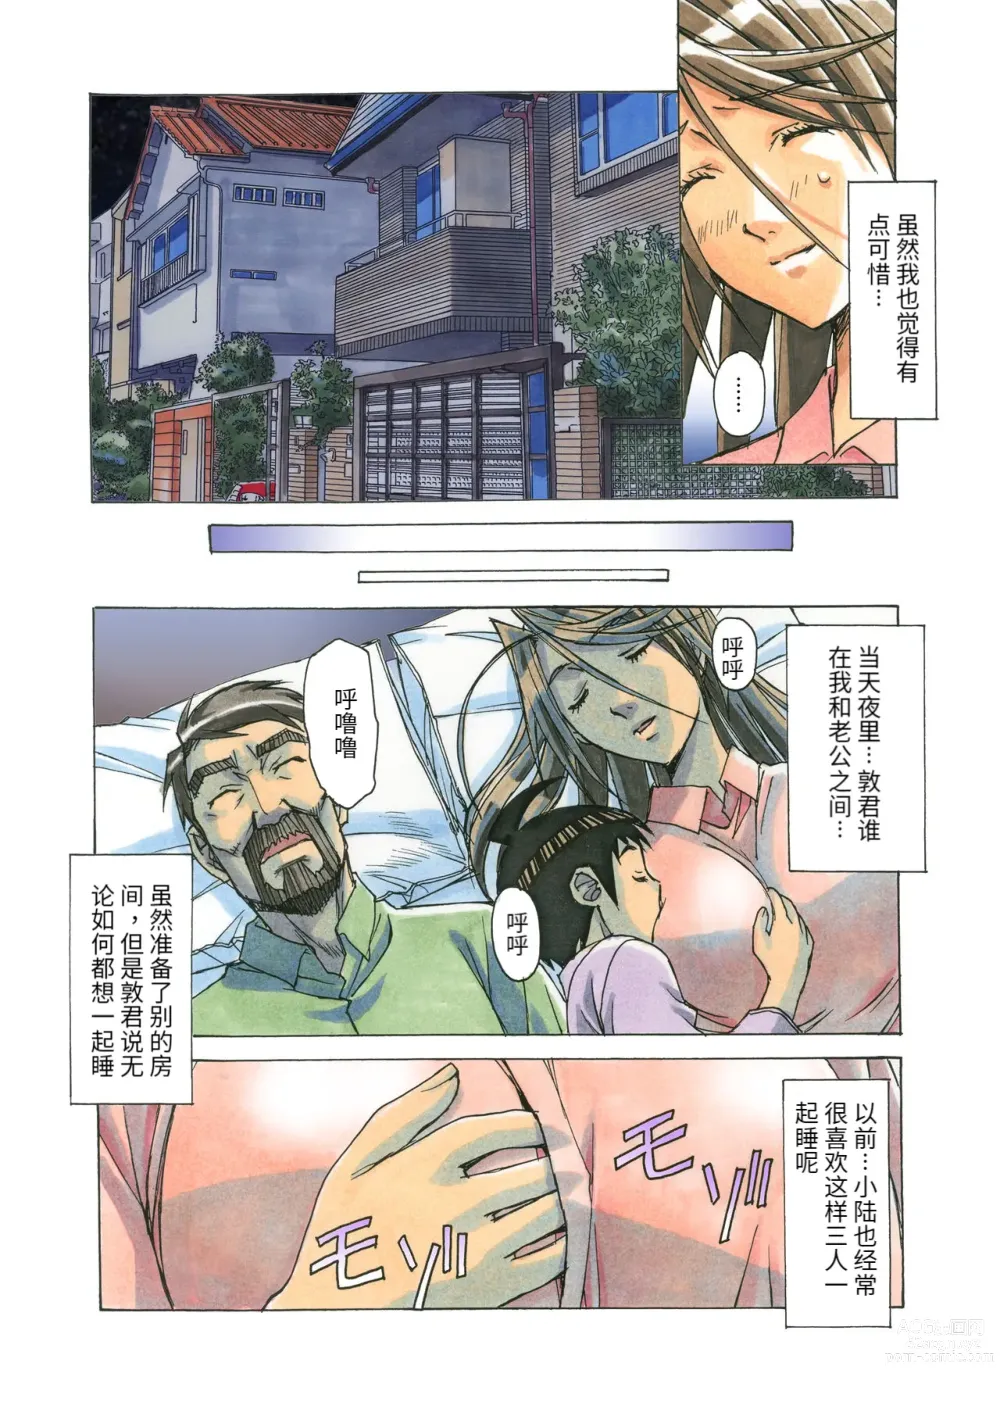 Page 127 of doujinshi AKANE Color Version